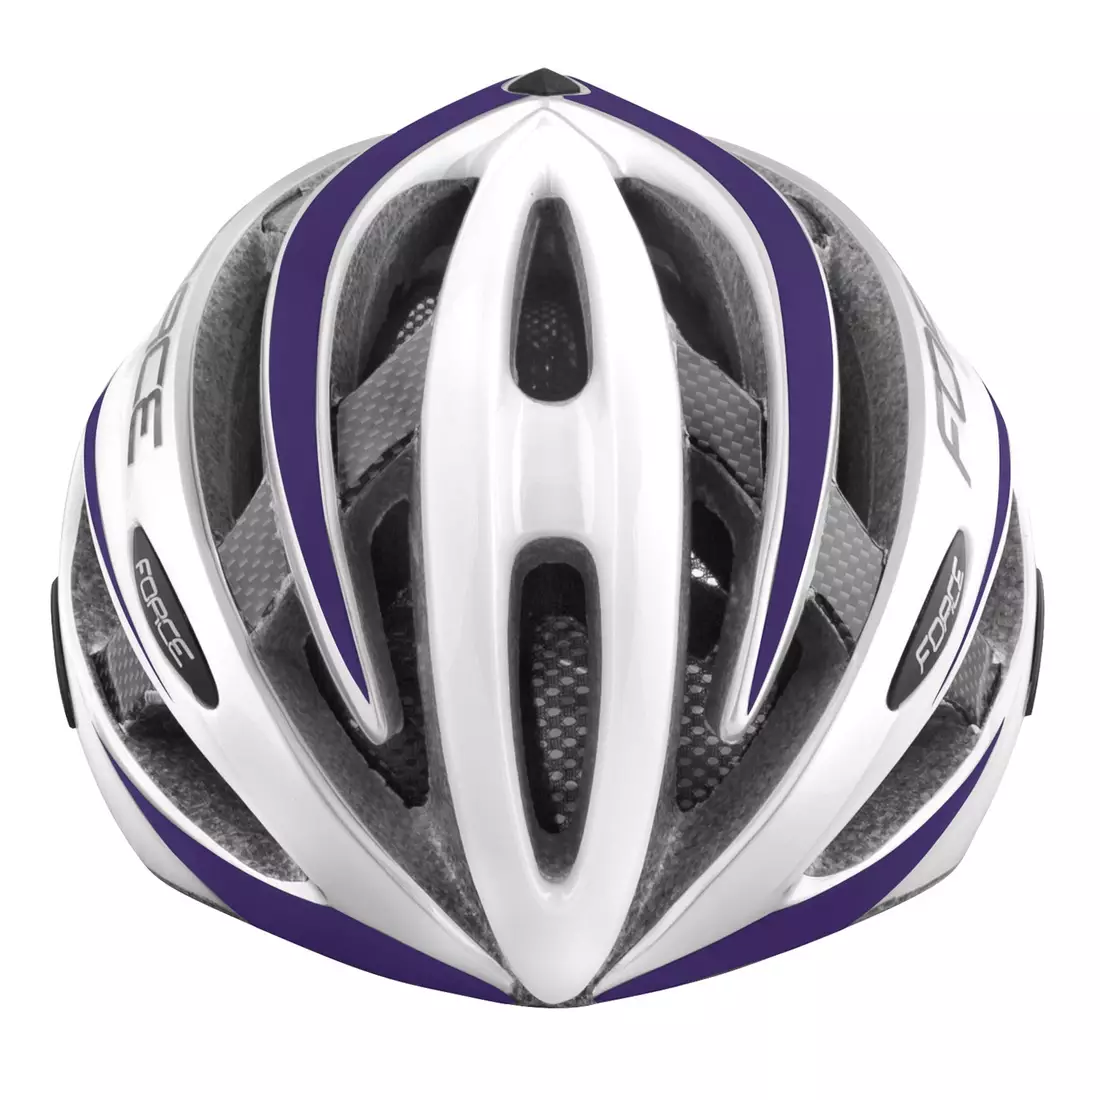 FORCE casca de bicicleta ROAD white/purple 9026195